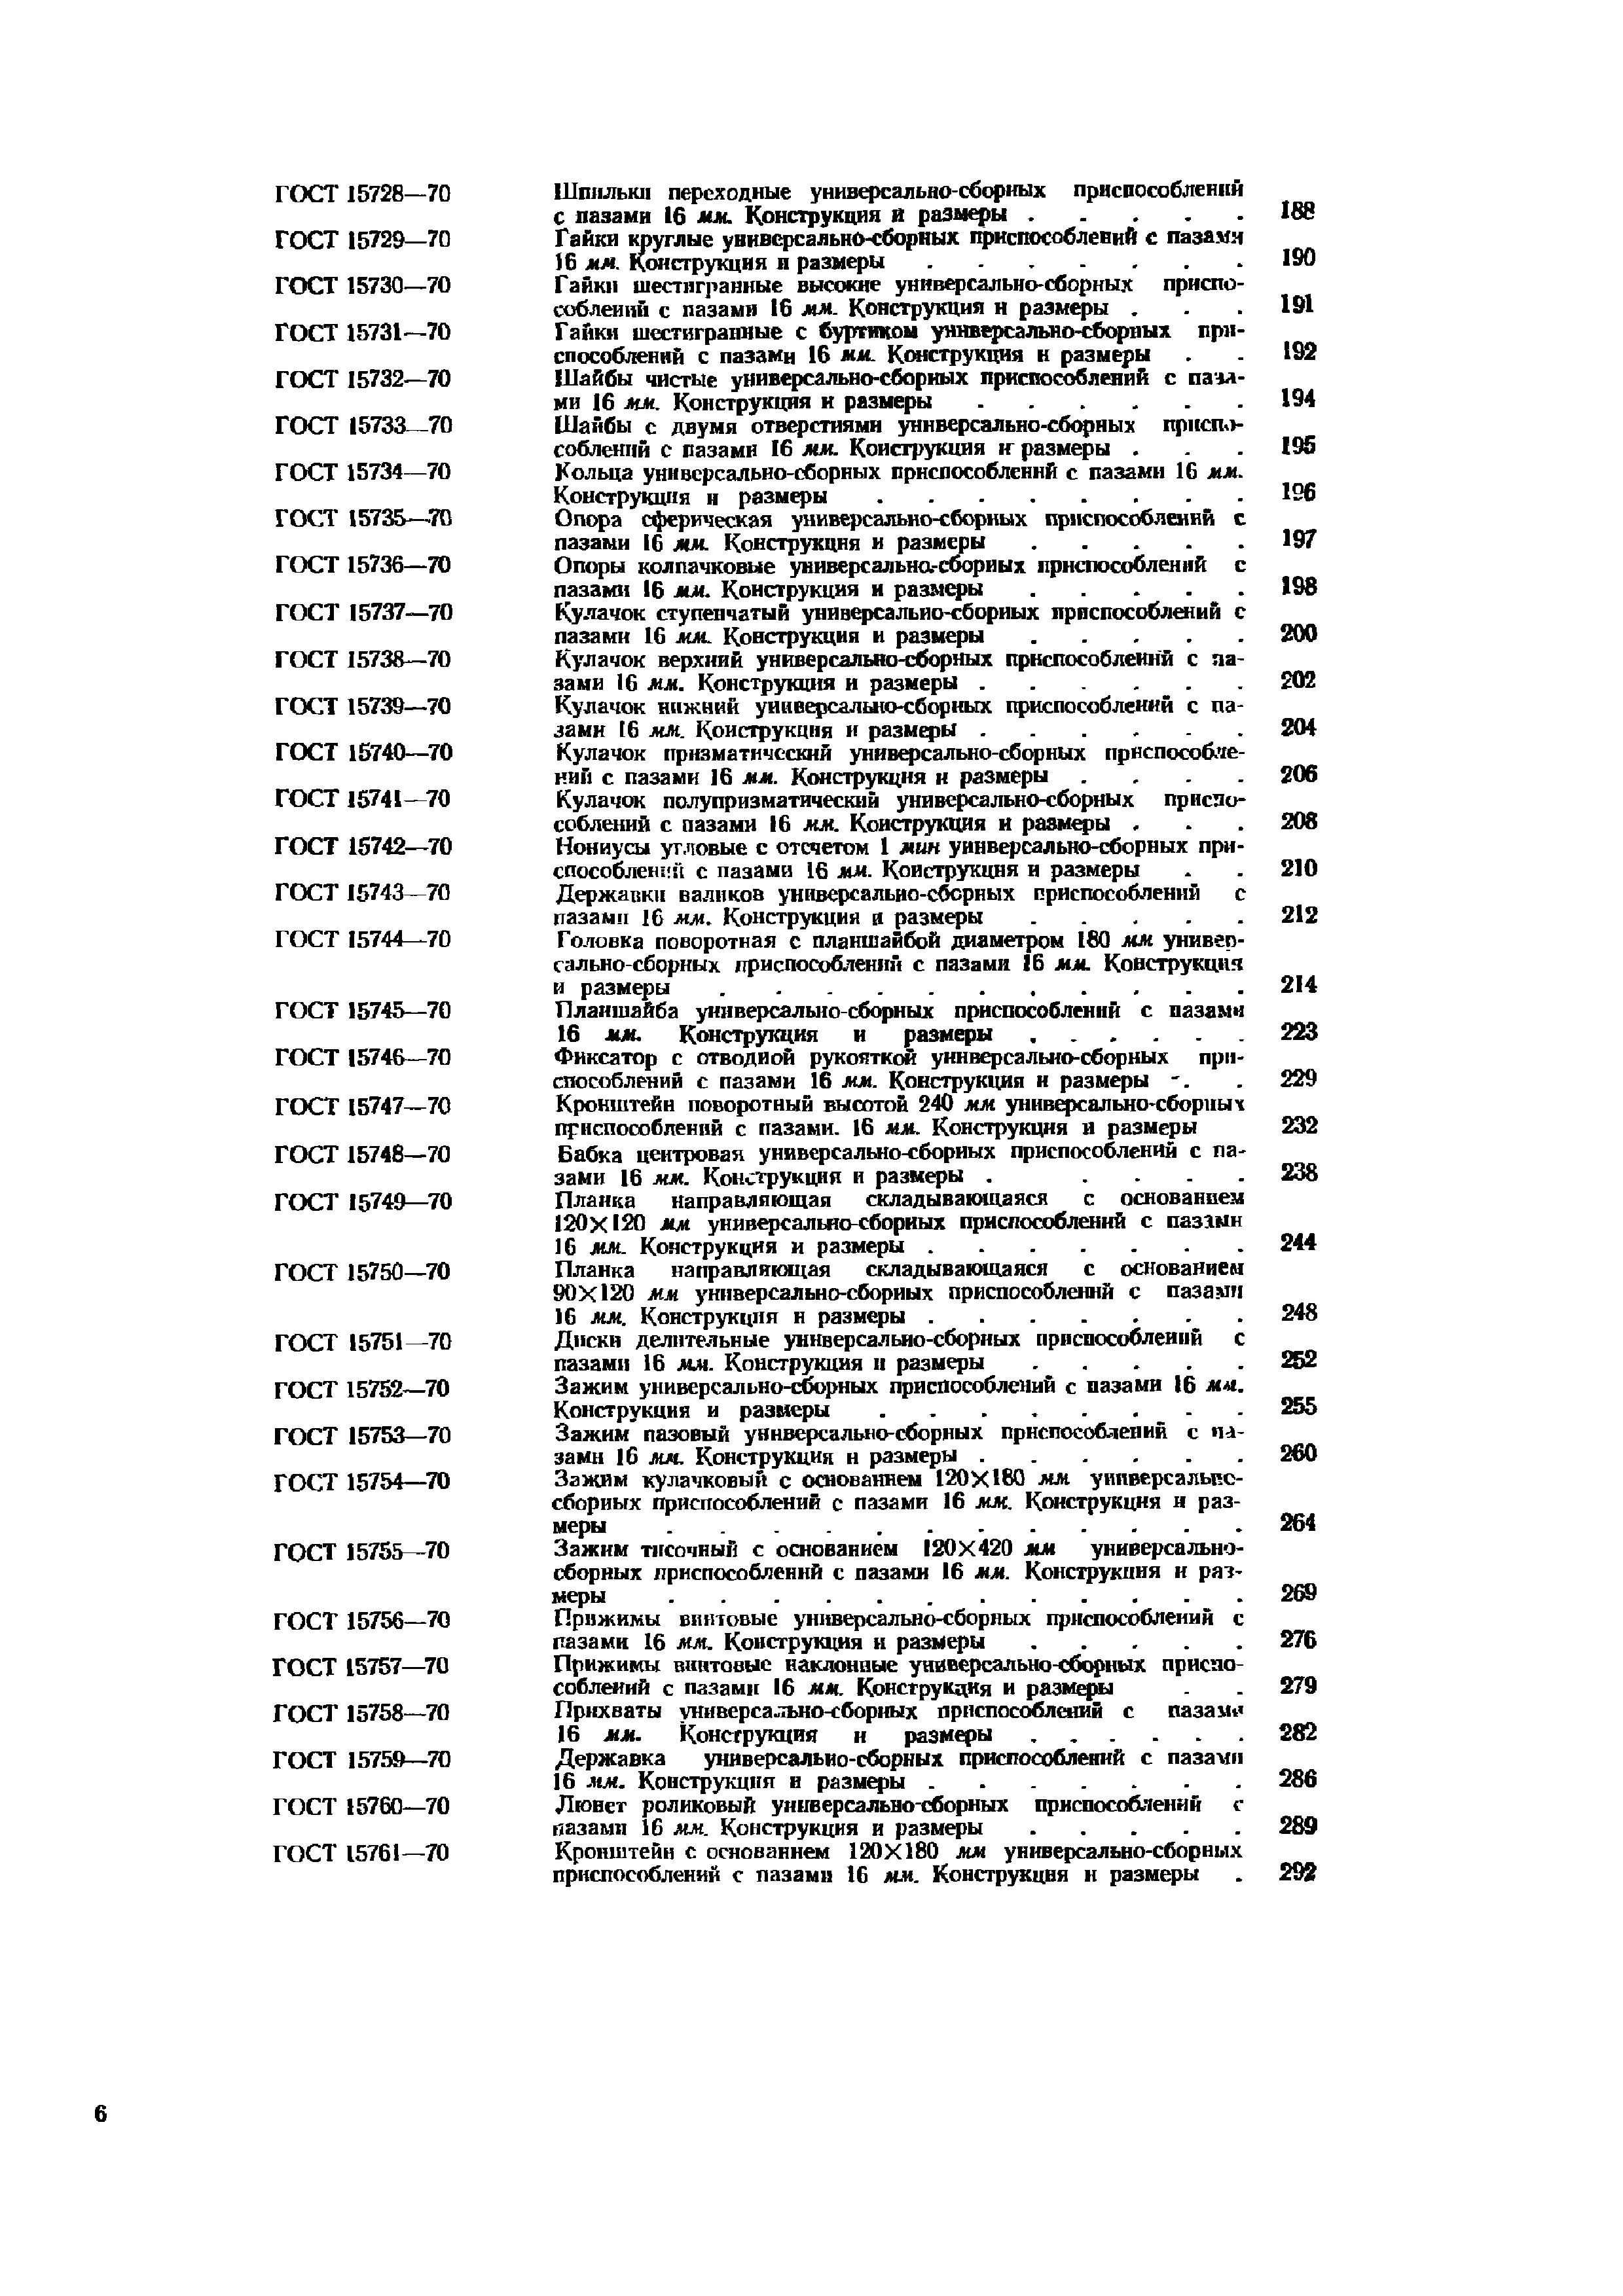 ГОСТ 15671-70